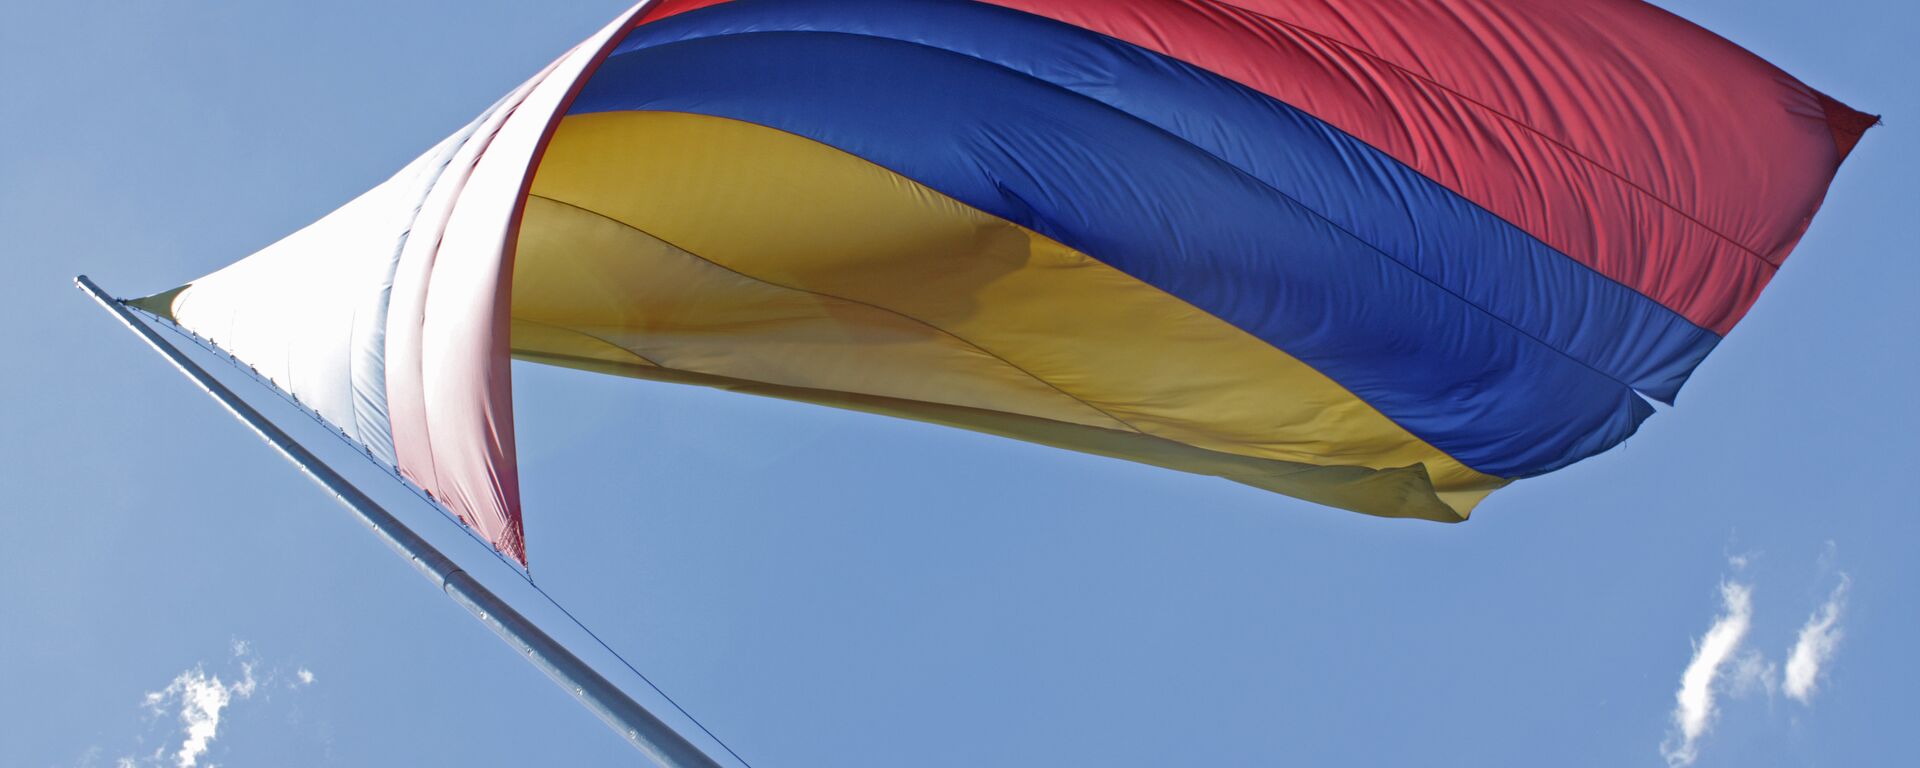 Bandera de Colombia - Sputnik Mundo, 1920, 04.06.2021